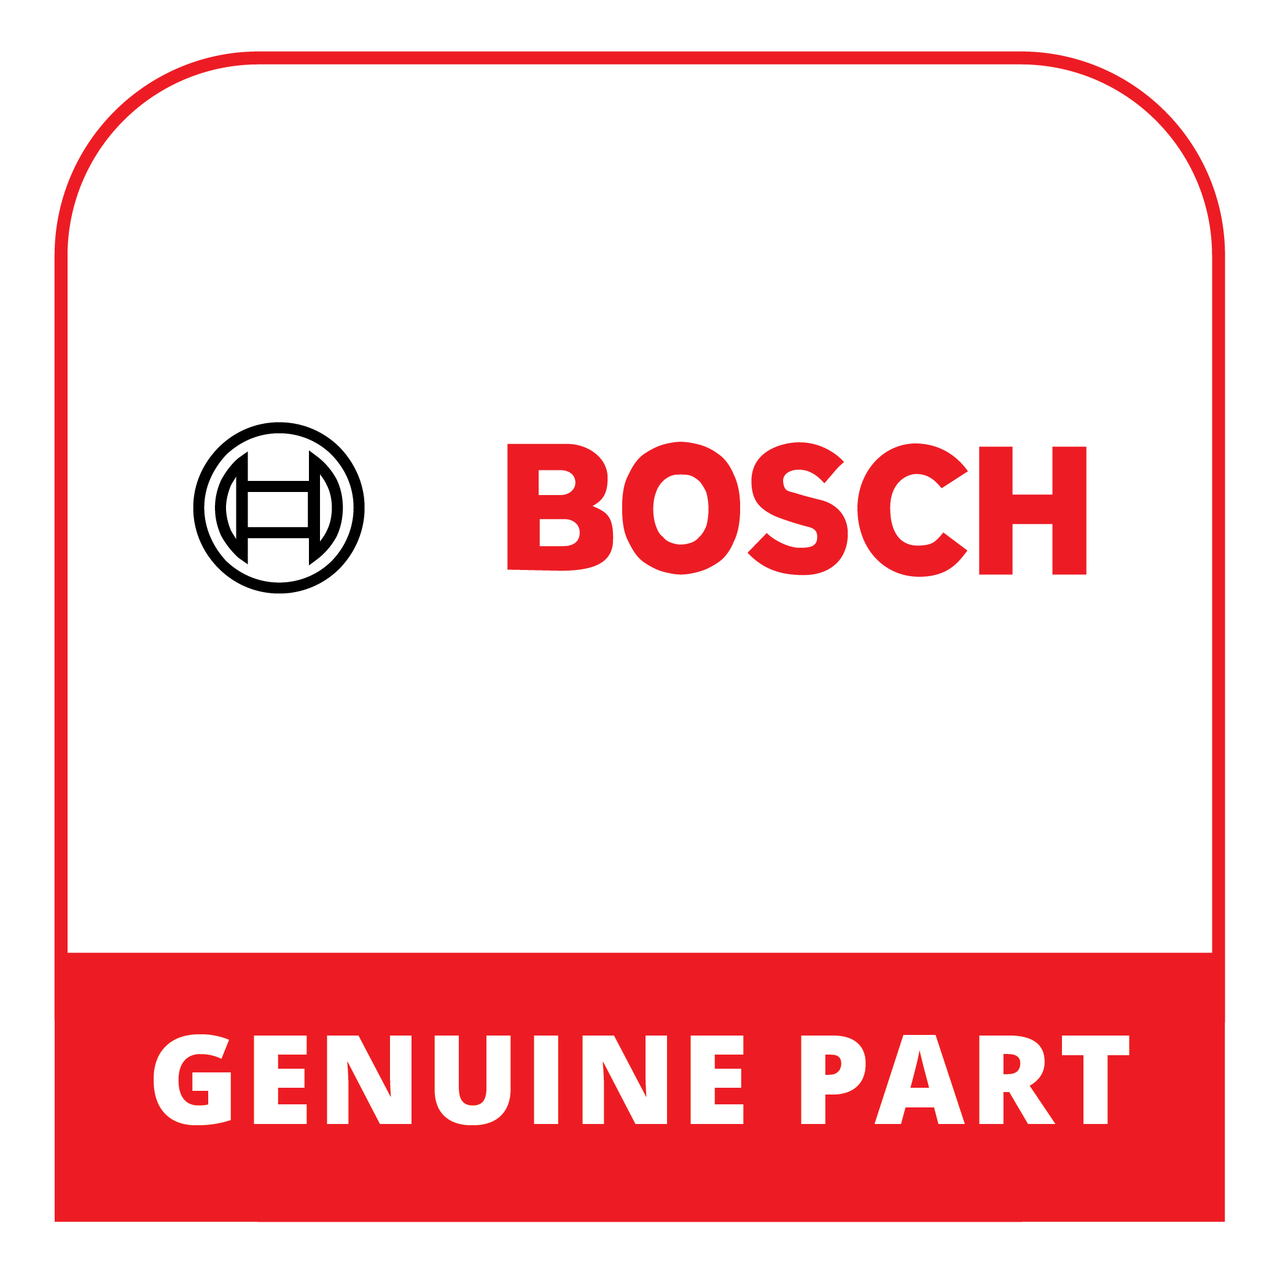 Bosch (Thermador) 20002736 - Lower Crockery Basket - Genuine Bosch (Thermador) Part